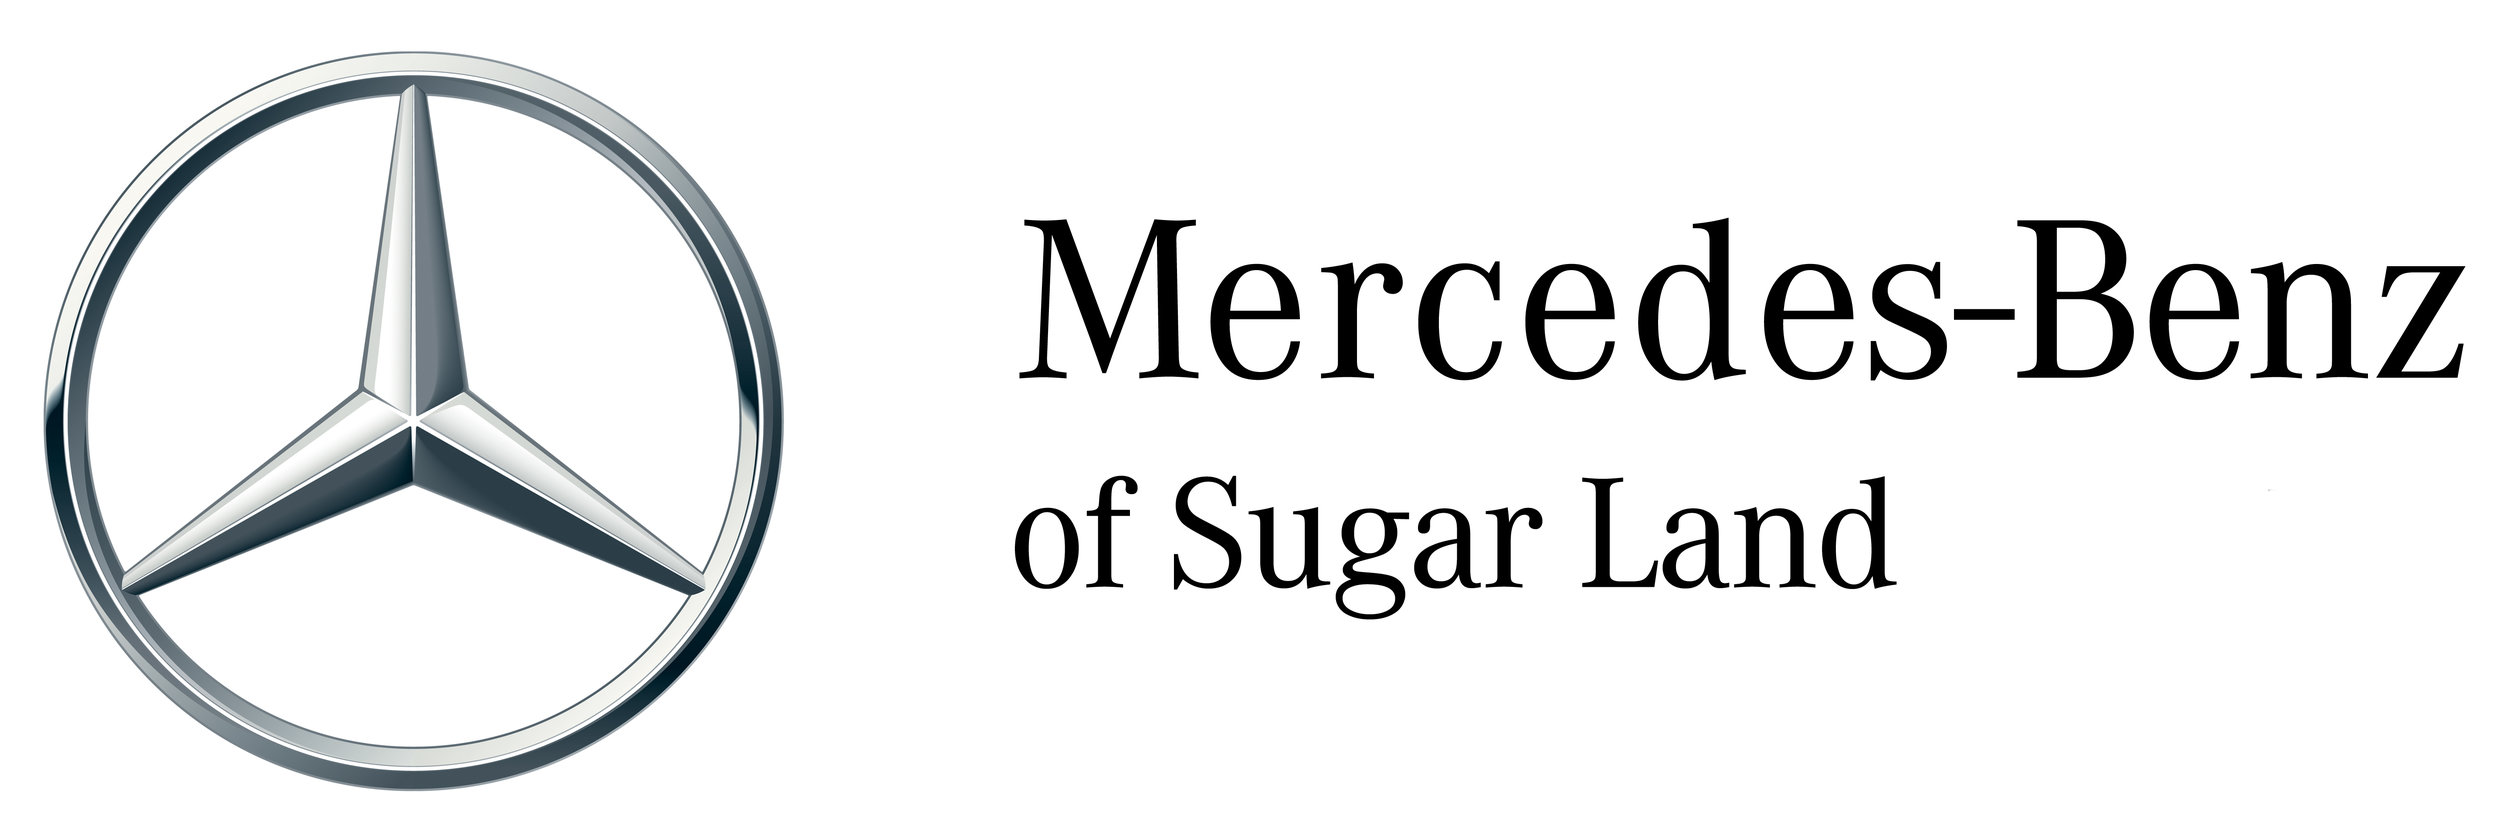 Mercedes-Benz of Sugar Land